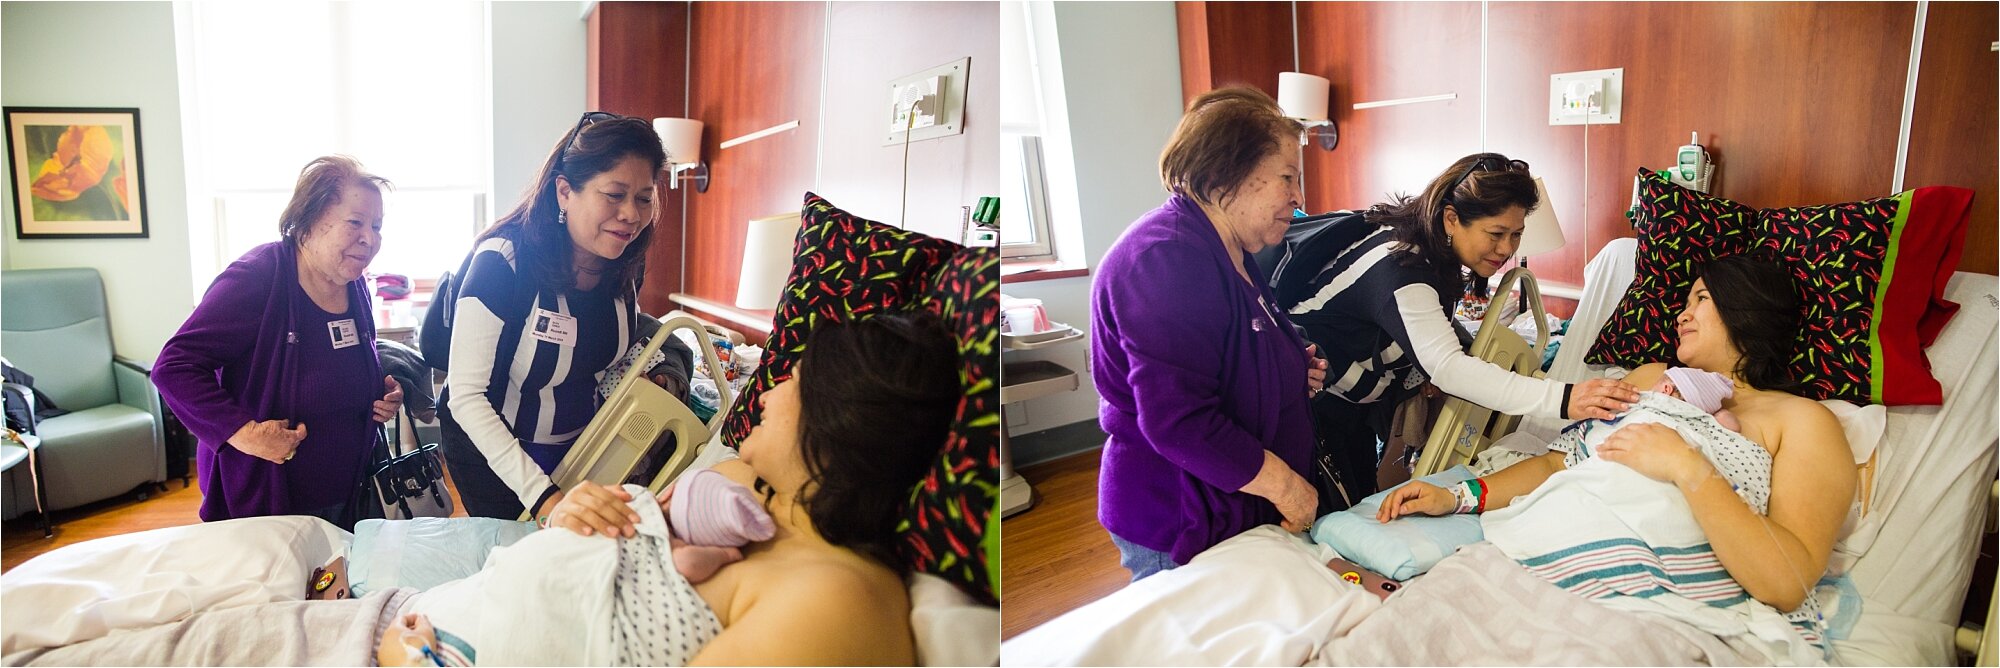 Grandma and great grandma meet new baby after c-section, Philadelphia Birth Photography